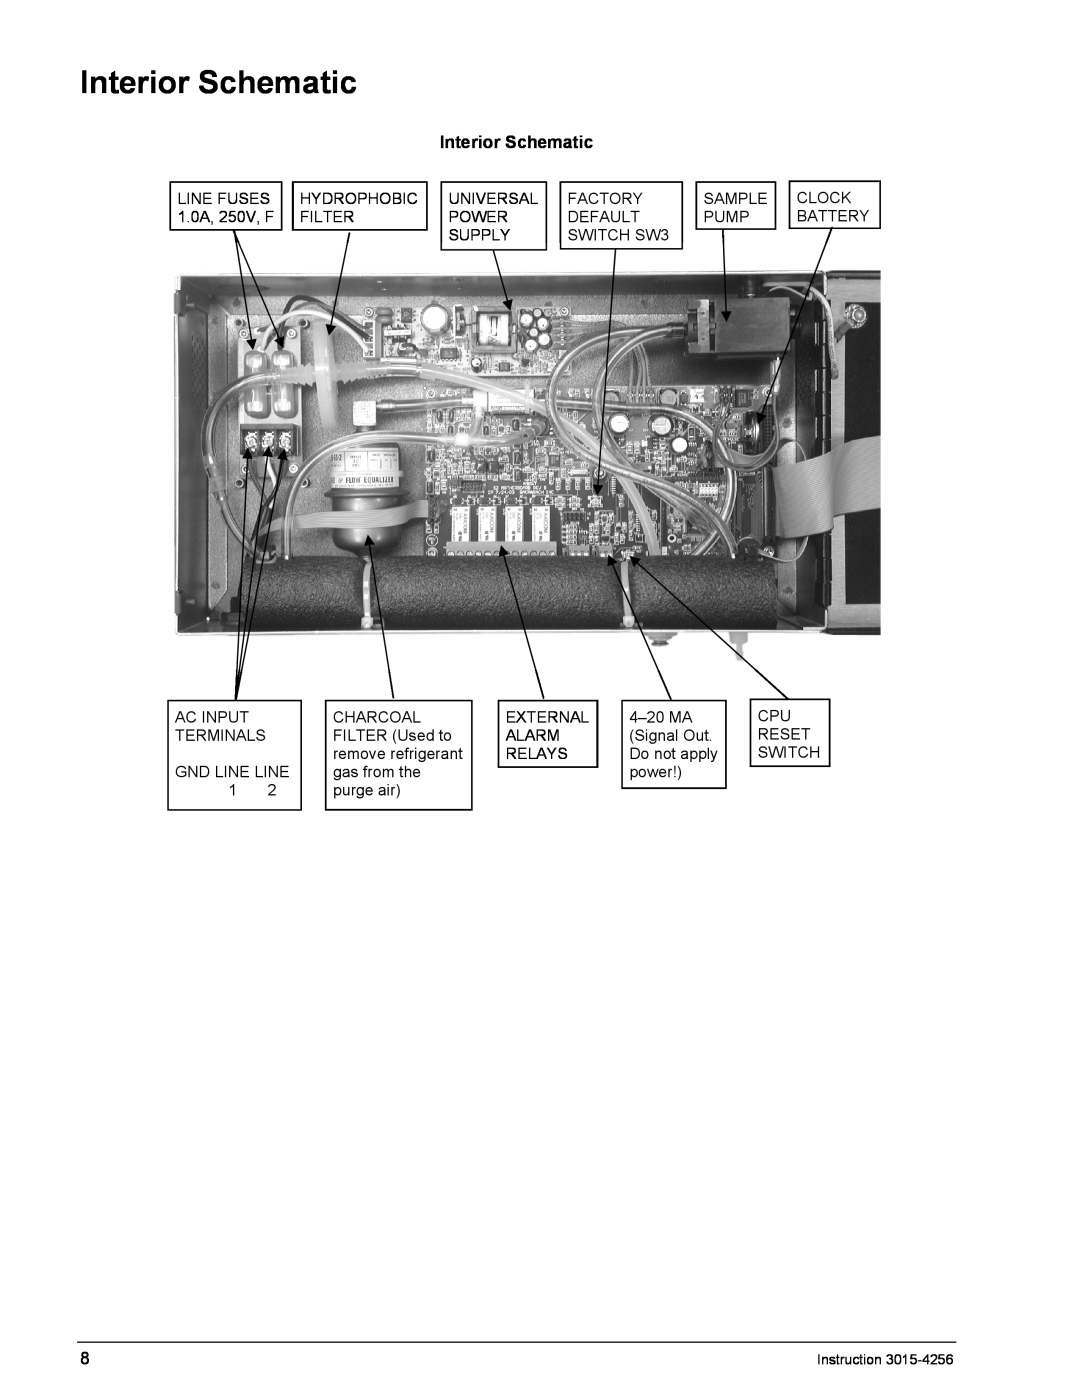 Bacharach 3015-4256 manual Interior Schematic 